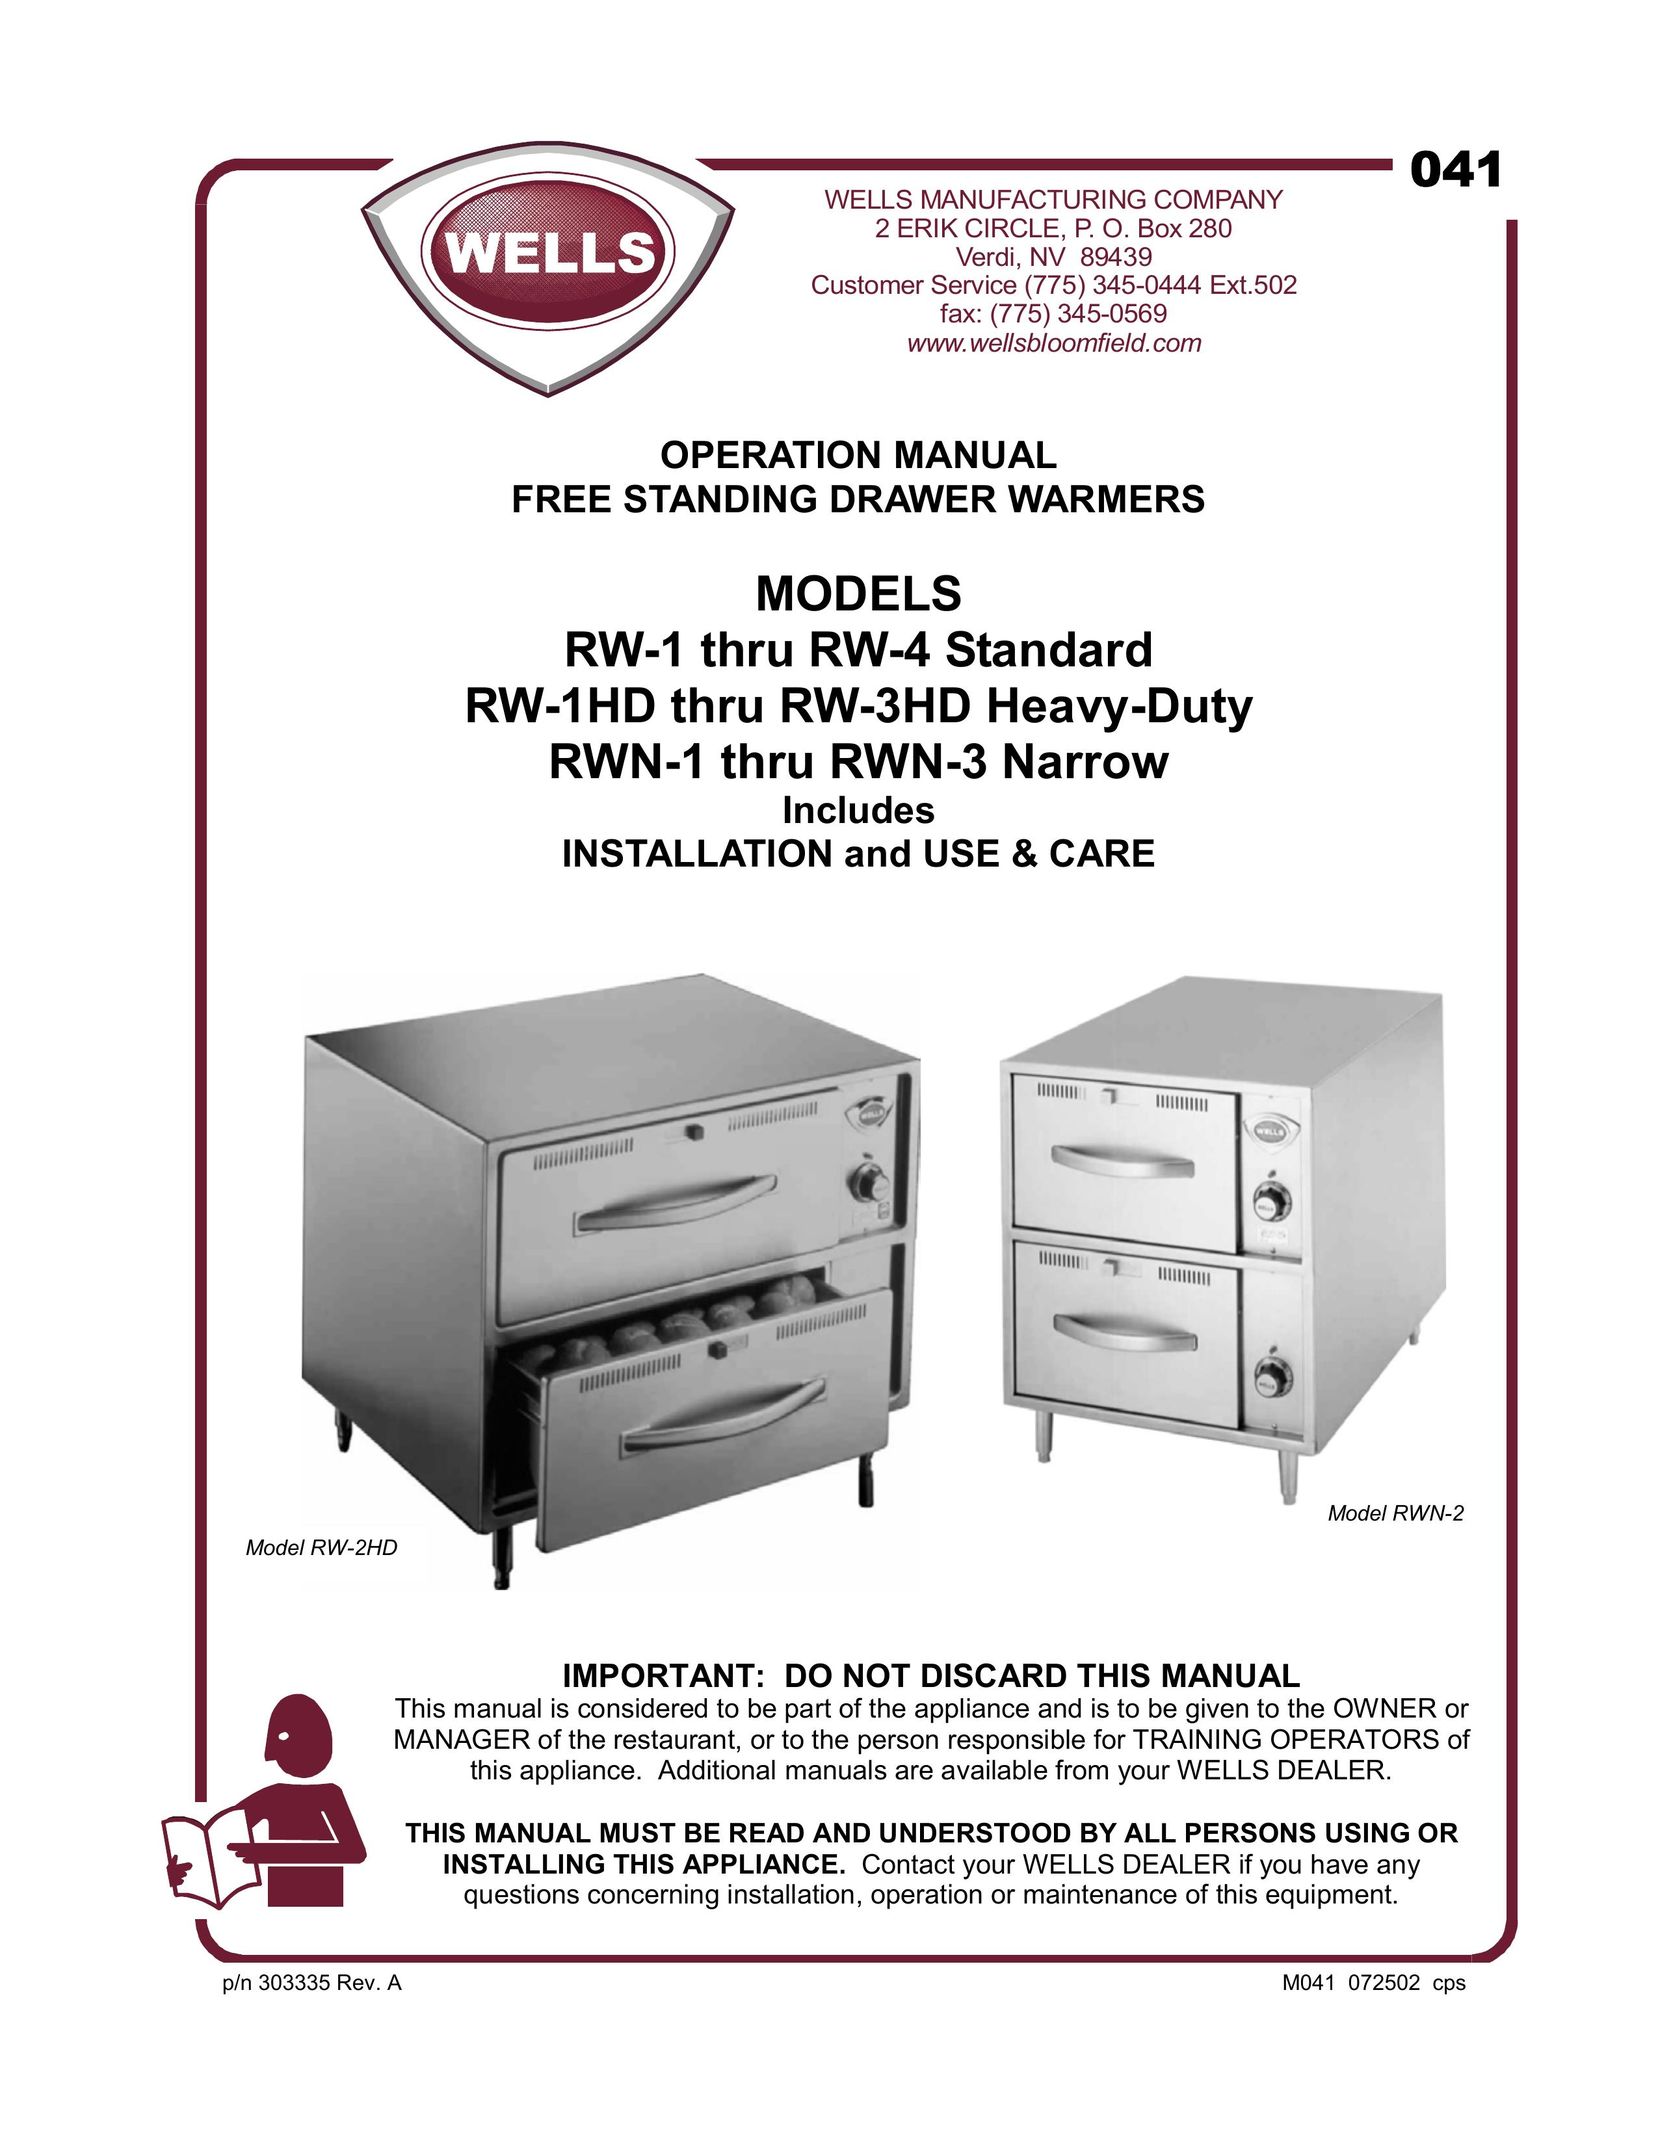 Wells RW-1 thru RW-4 Standard Food Warmer User Manual